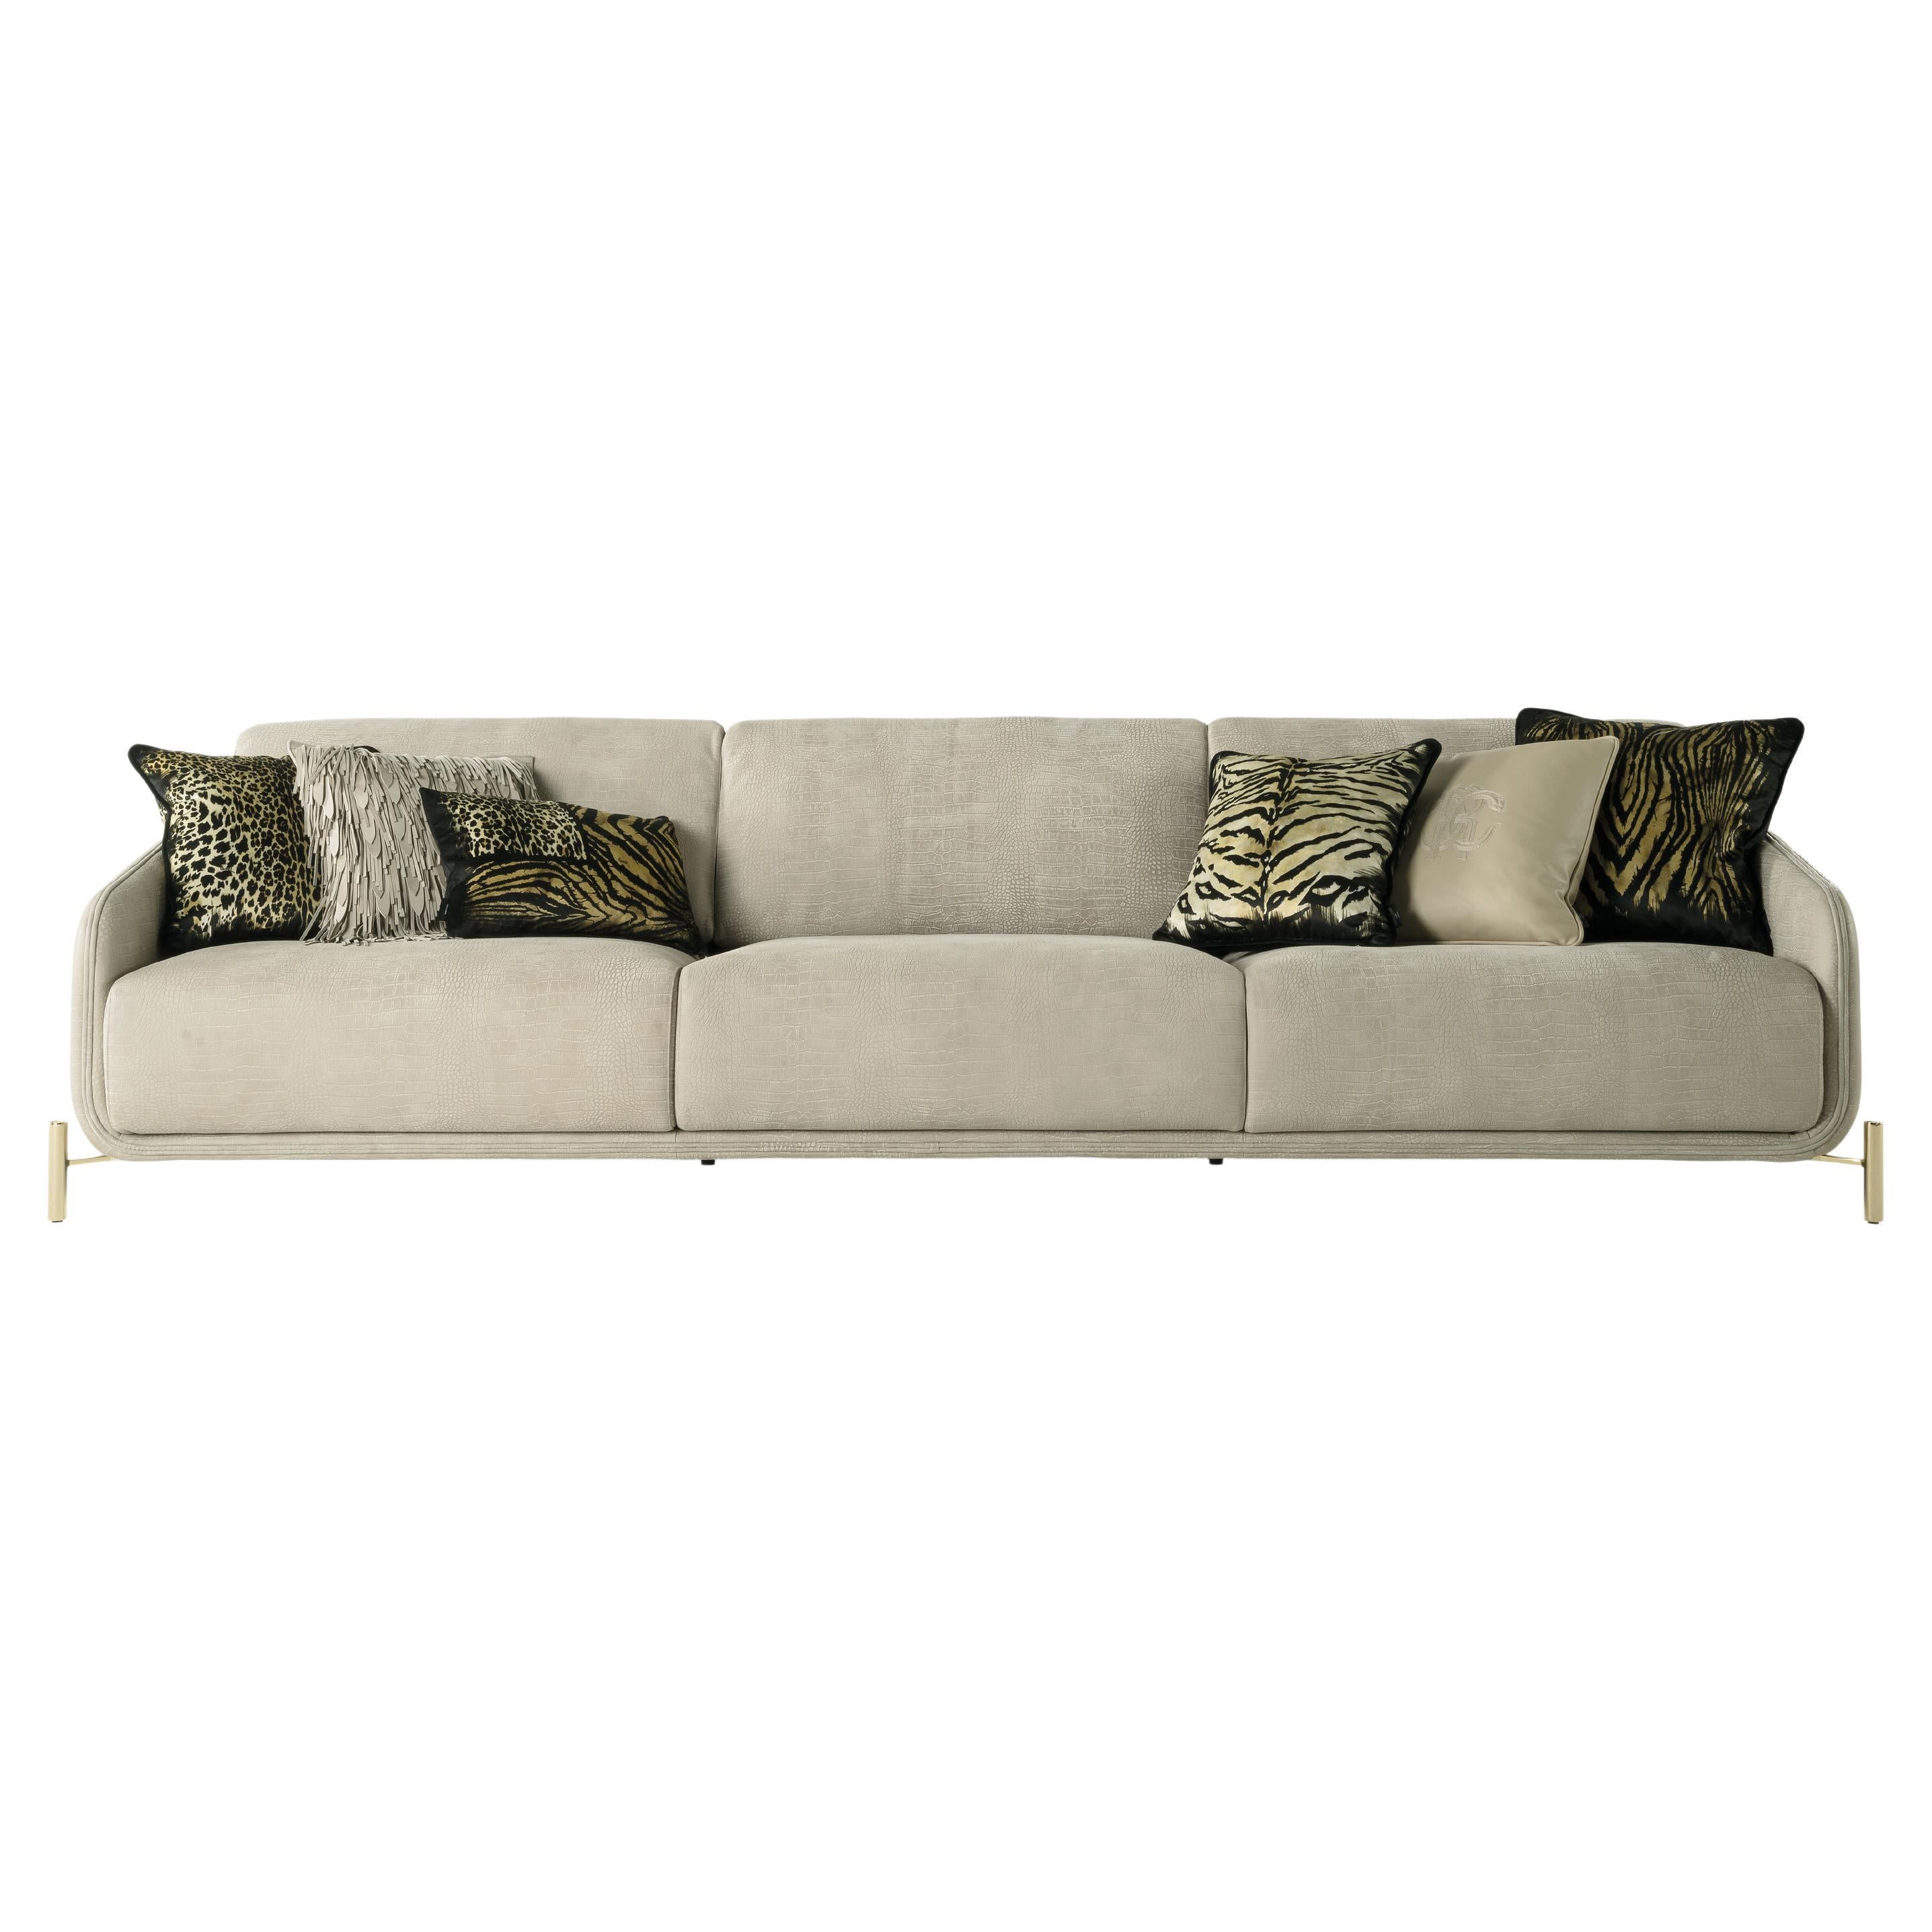 Clifton-Sofa aus Leder des 21. Jahrhunderts von Roberto Cavalli Home Interiors